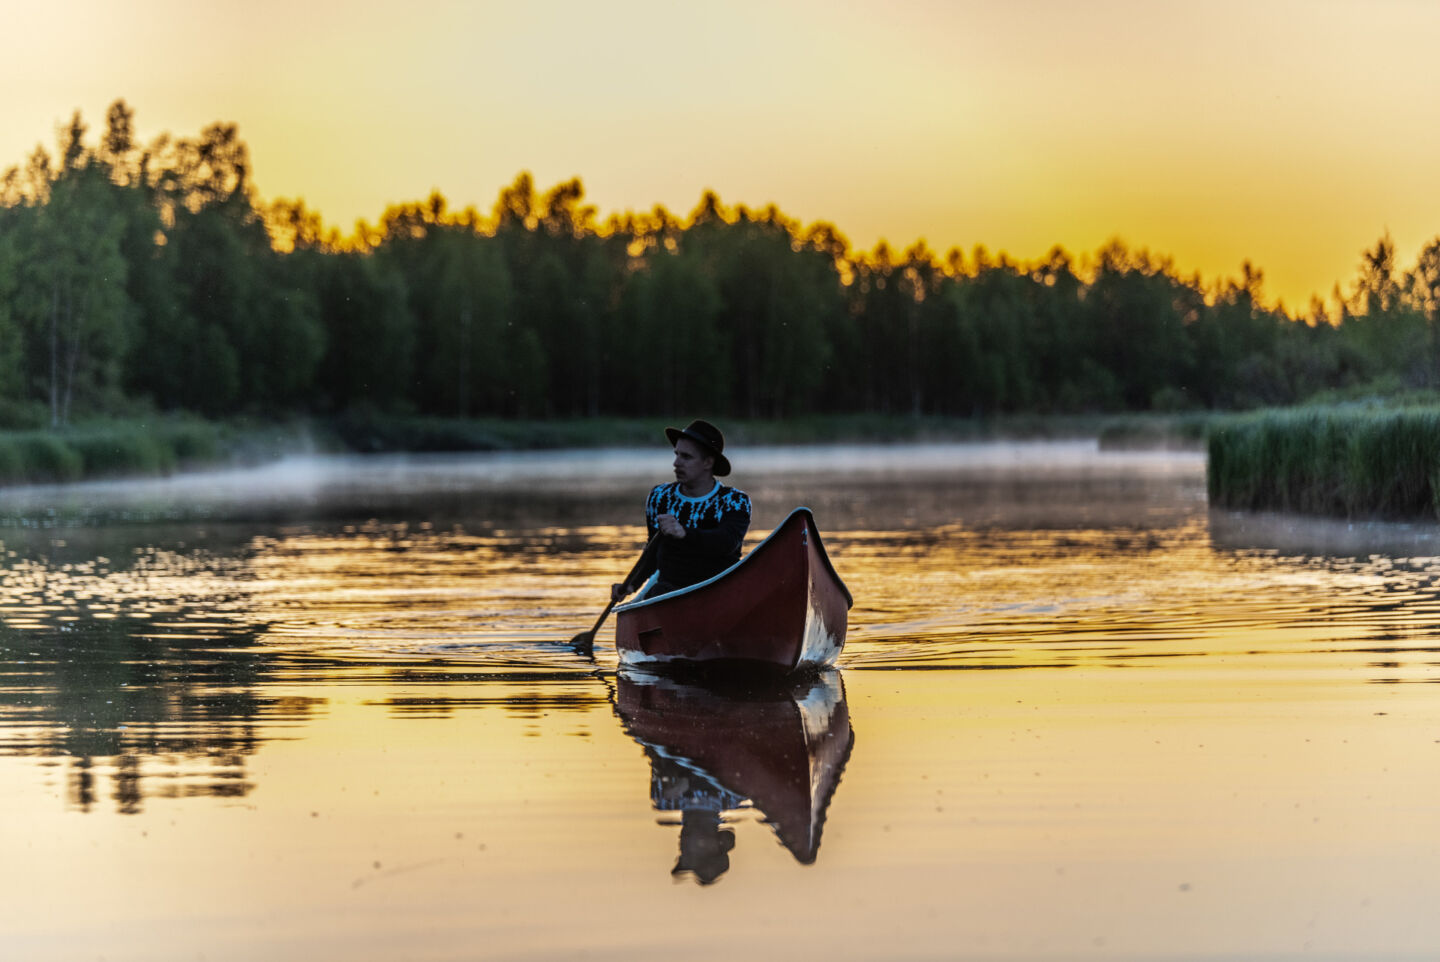 Canoeing in summer in Ranua, Finland